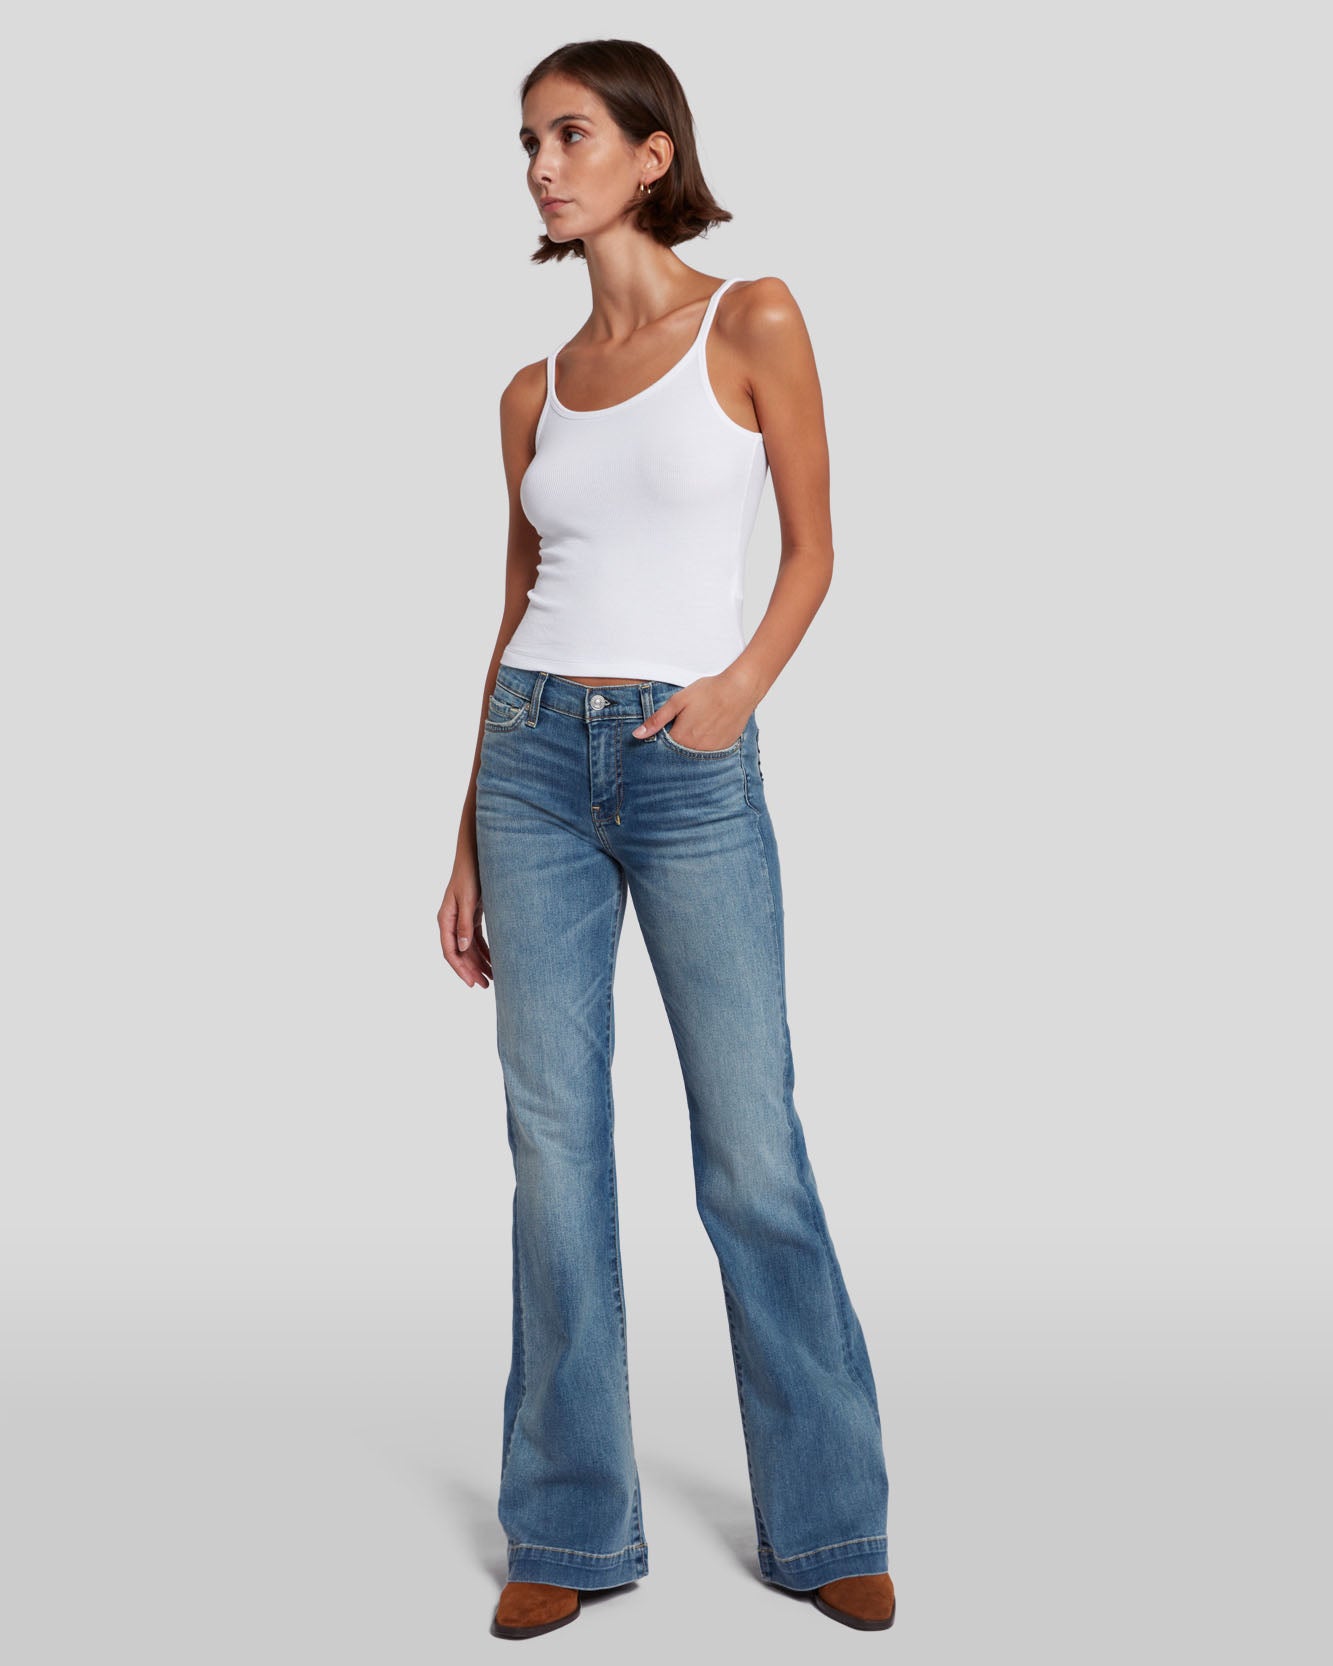 95# Jeans Most ofcl seven  Seven jeans, Clothes design, Fashion tips